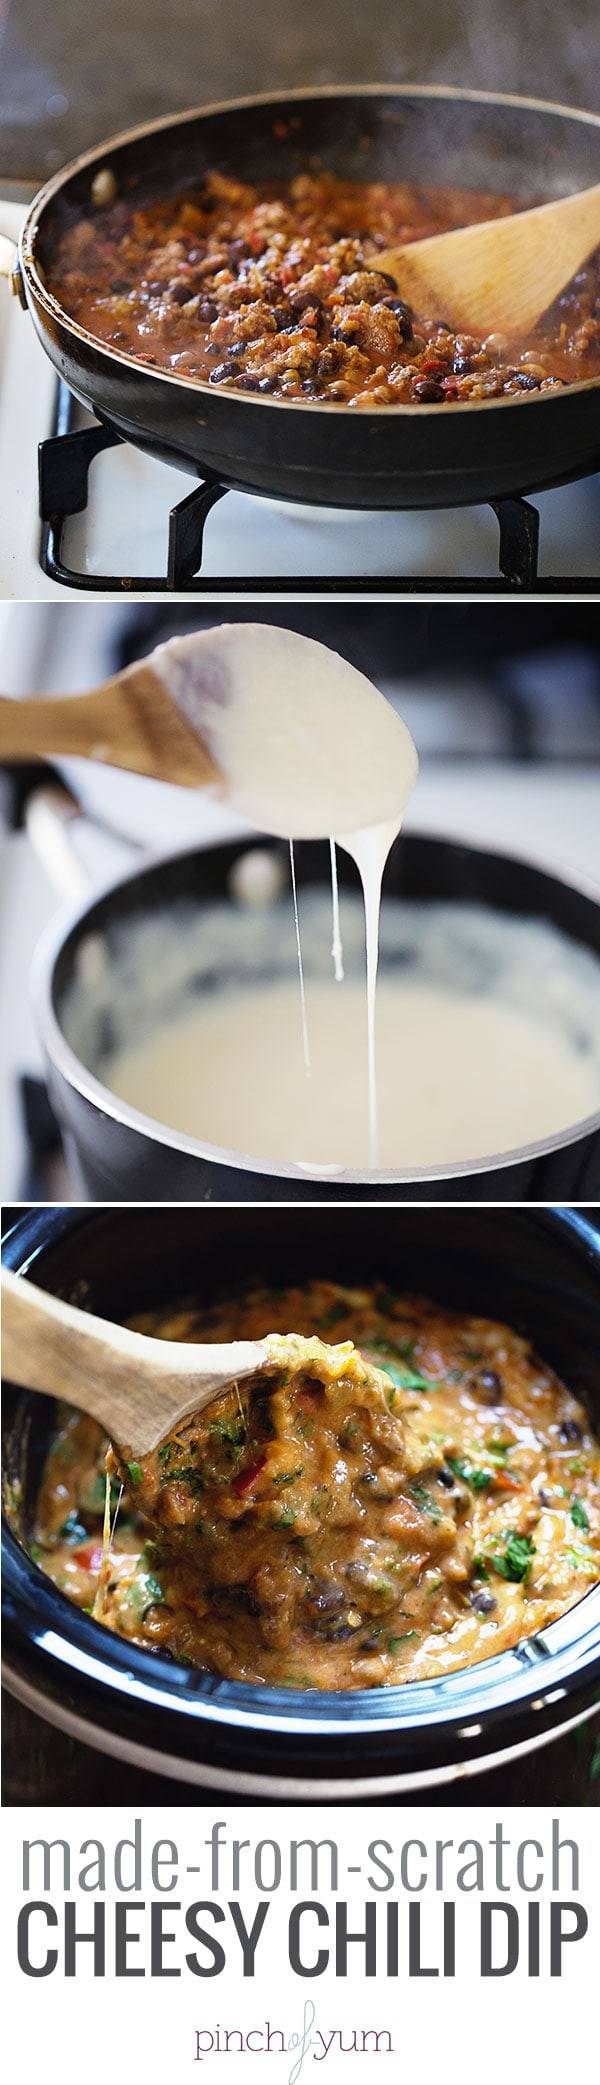 Process of making Cheesy Chili Dip.